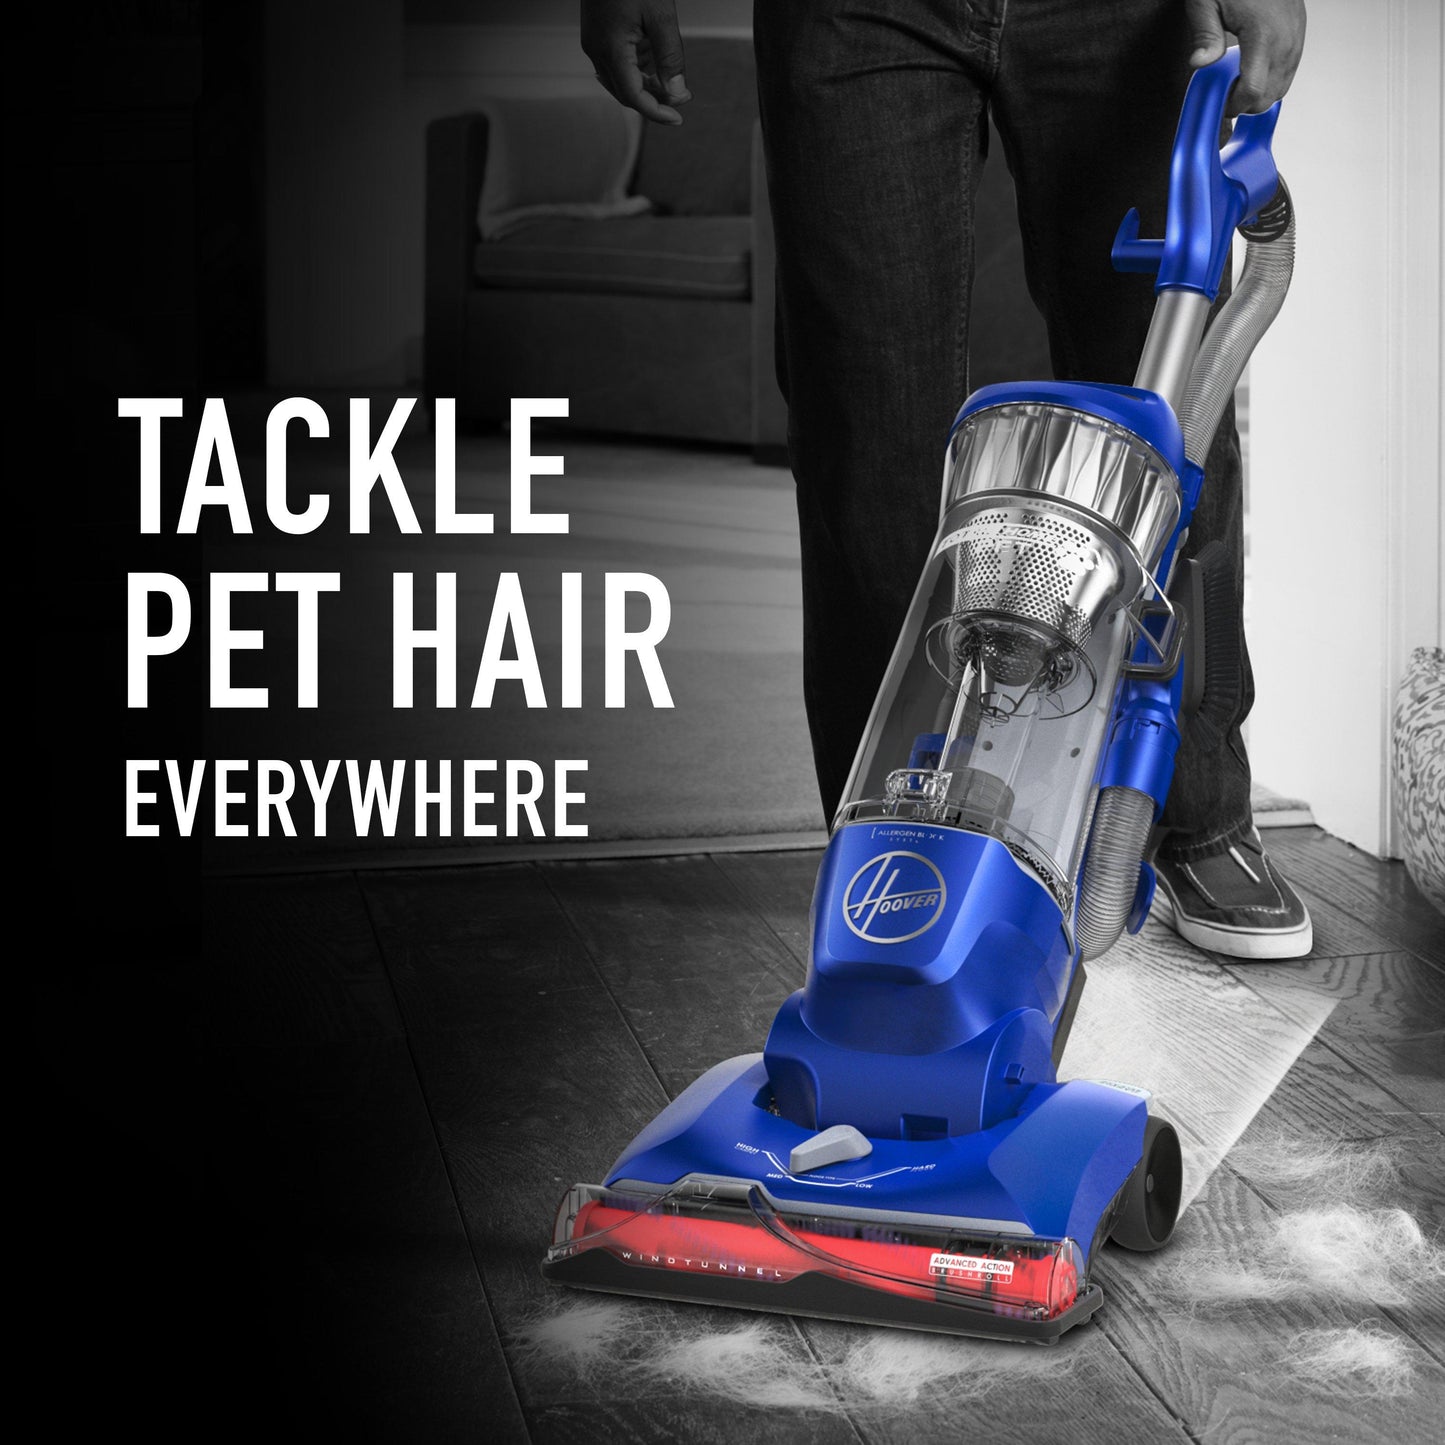 Total Home Pet MaxLife Upright Vacuum